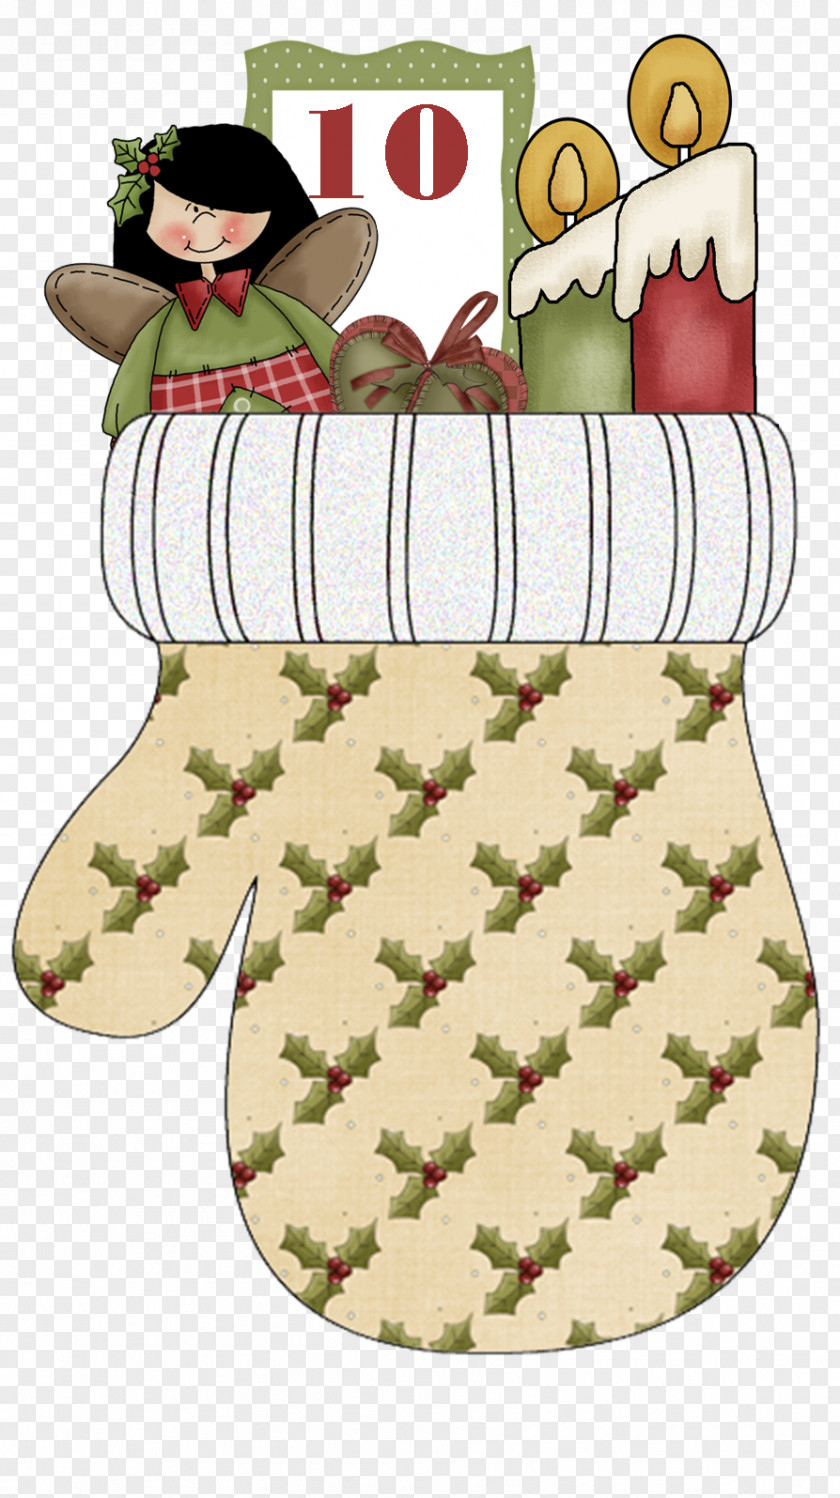 Christmas Stockings Ornament Cartoon PNG